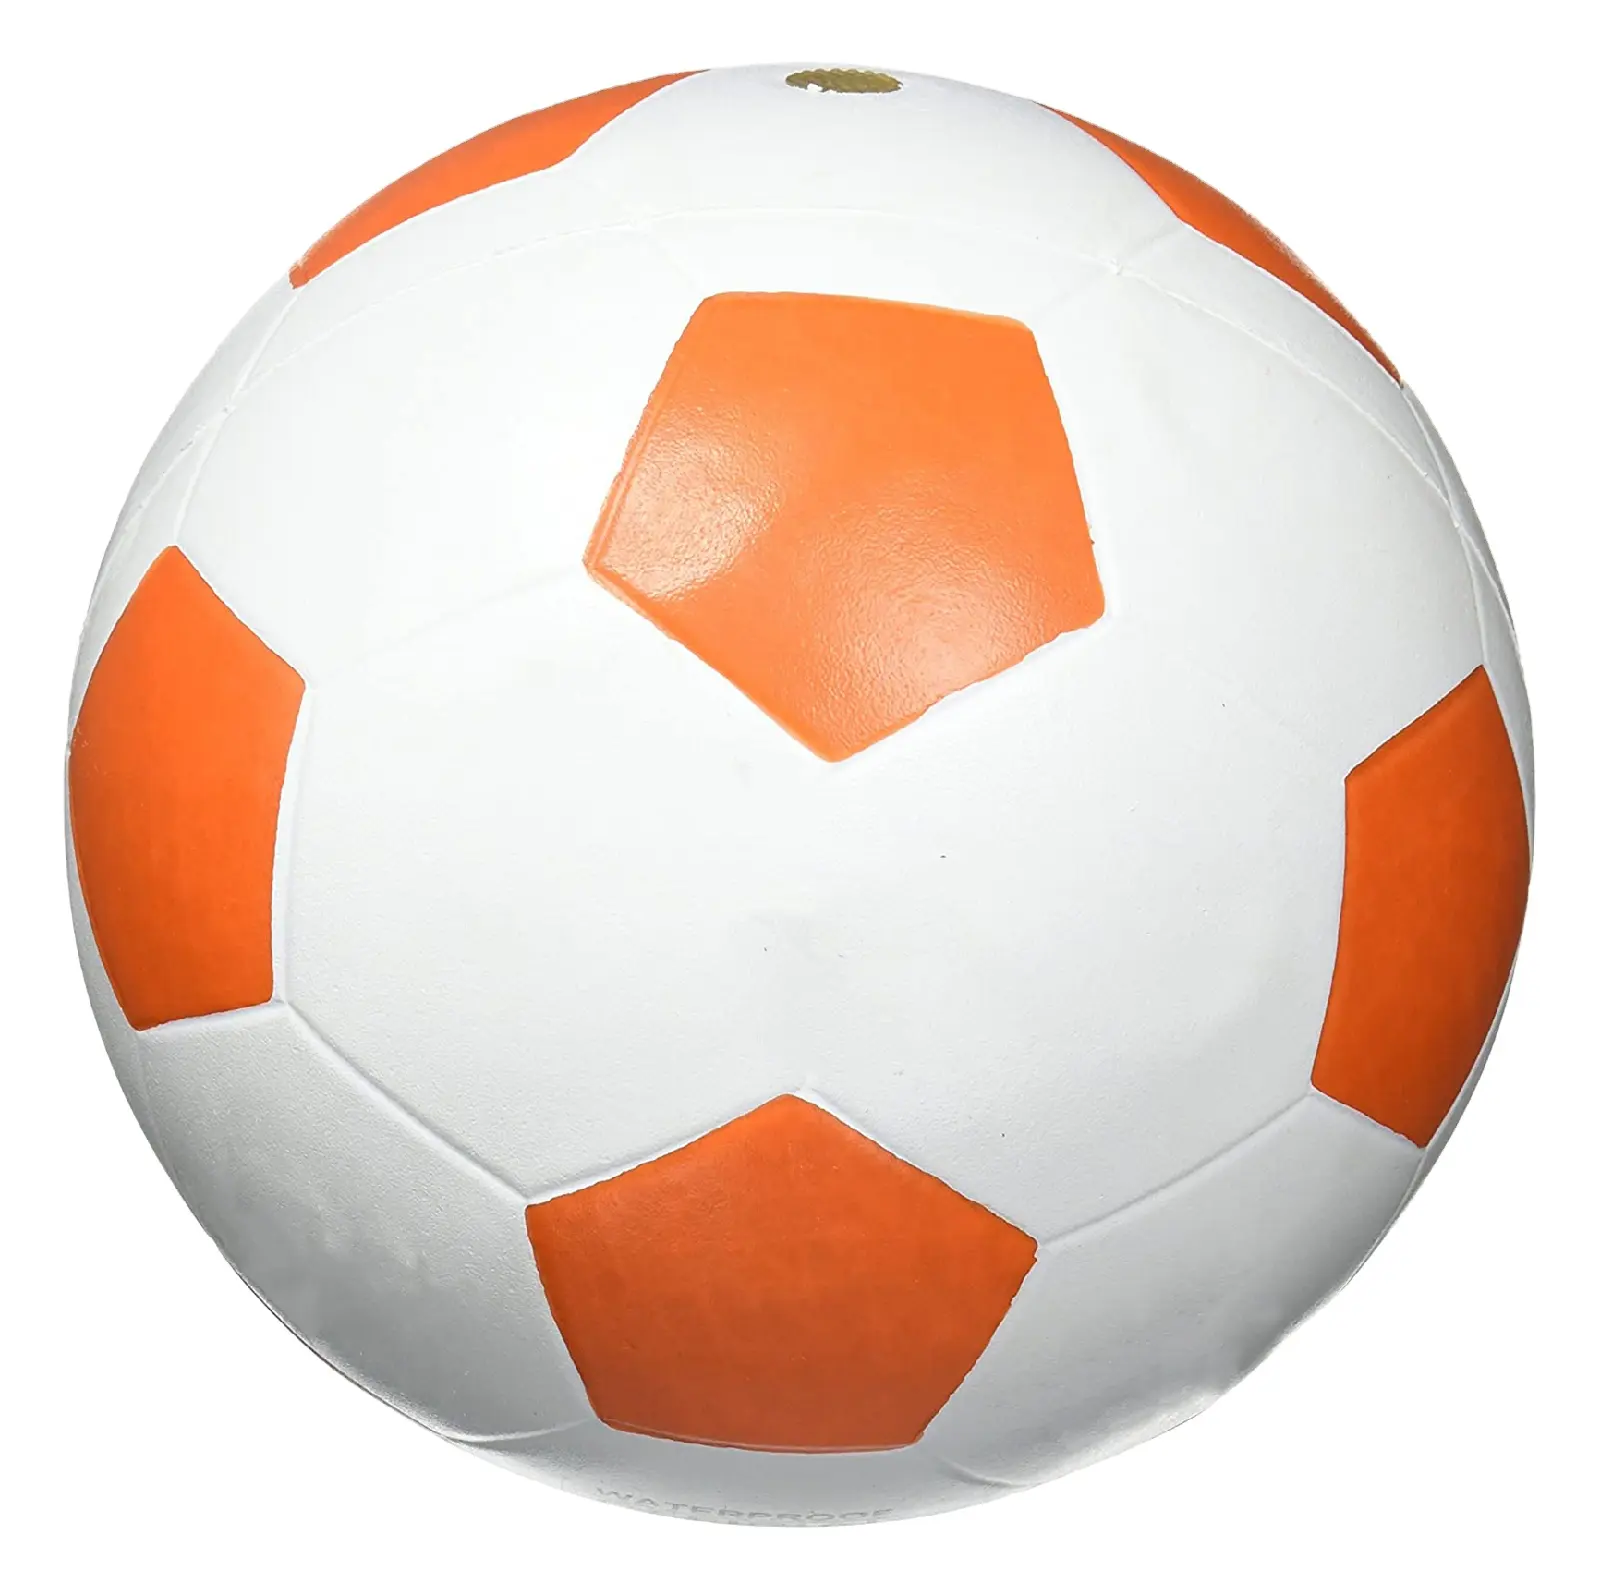 Offizieller Fußball PU Fußball Größe 5 Team Match Rutsch festes nahtloses Fußball training Sportgeräte mit glänzender Oberfläche